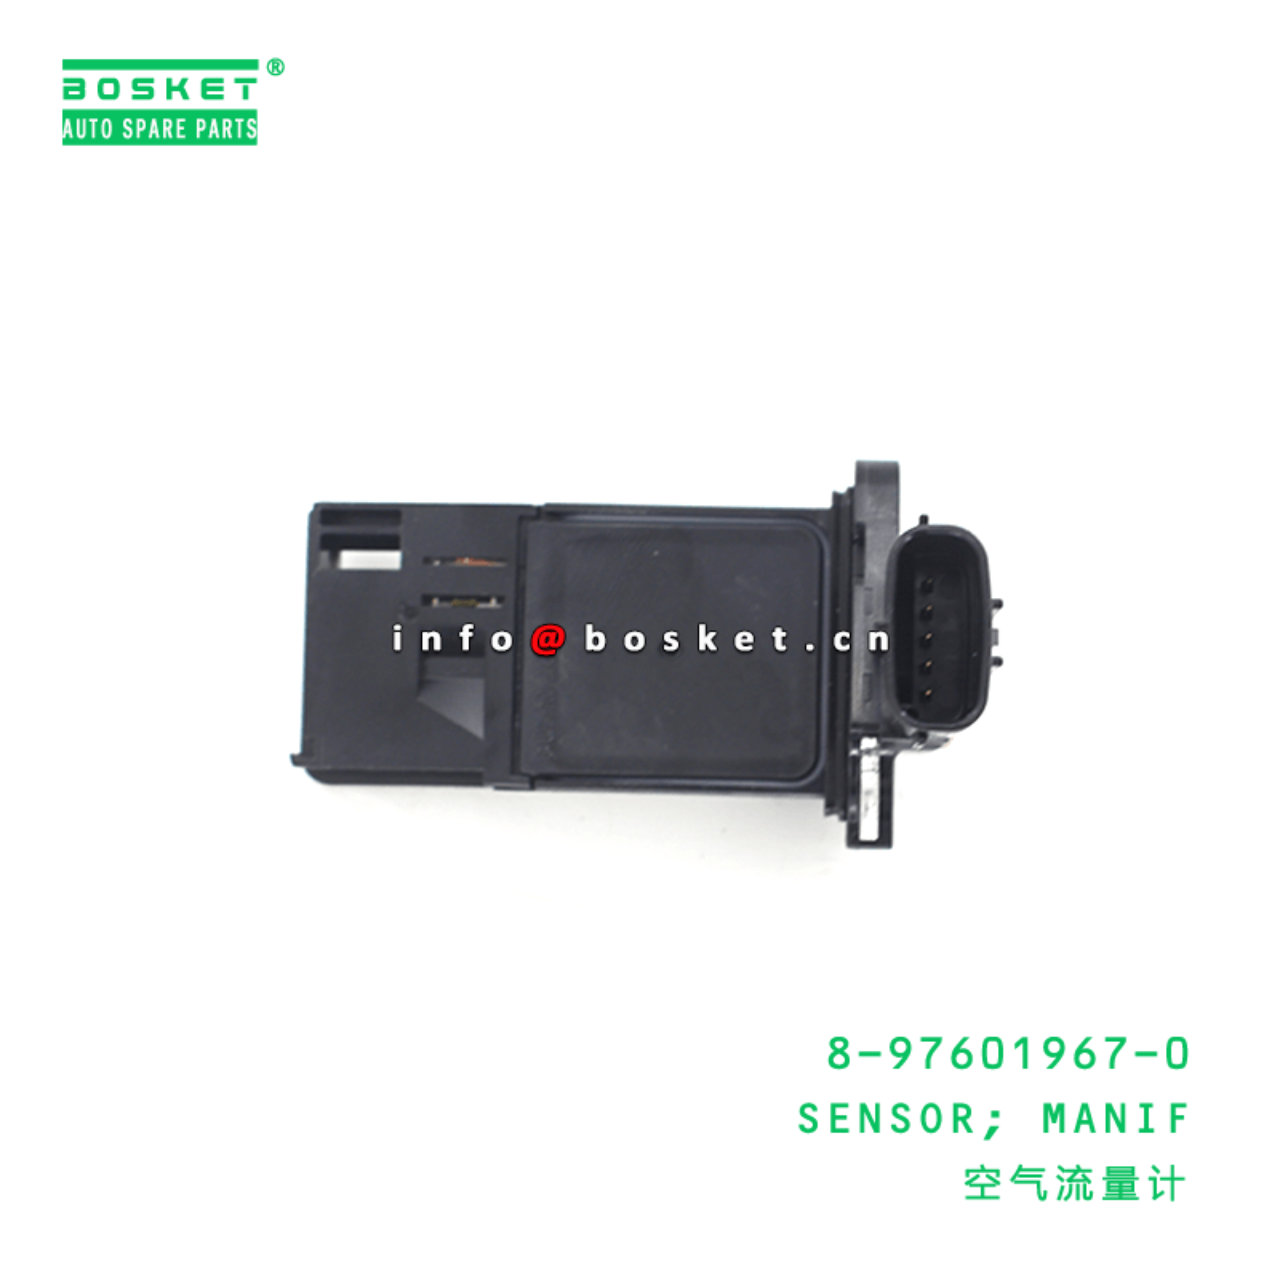 8-97601967-0 Manifold Sensor 8976019670 Suitable for ISUZU VC46 